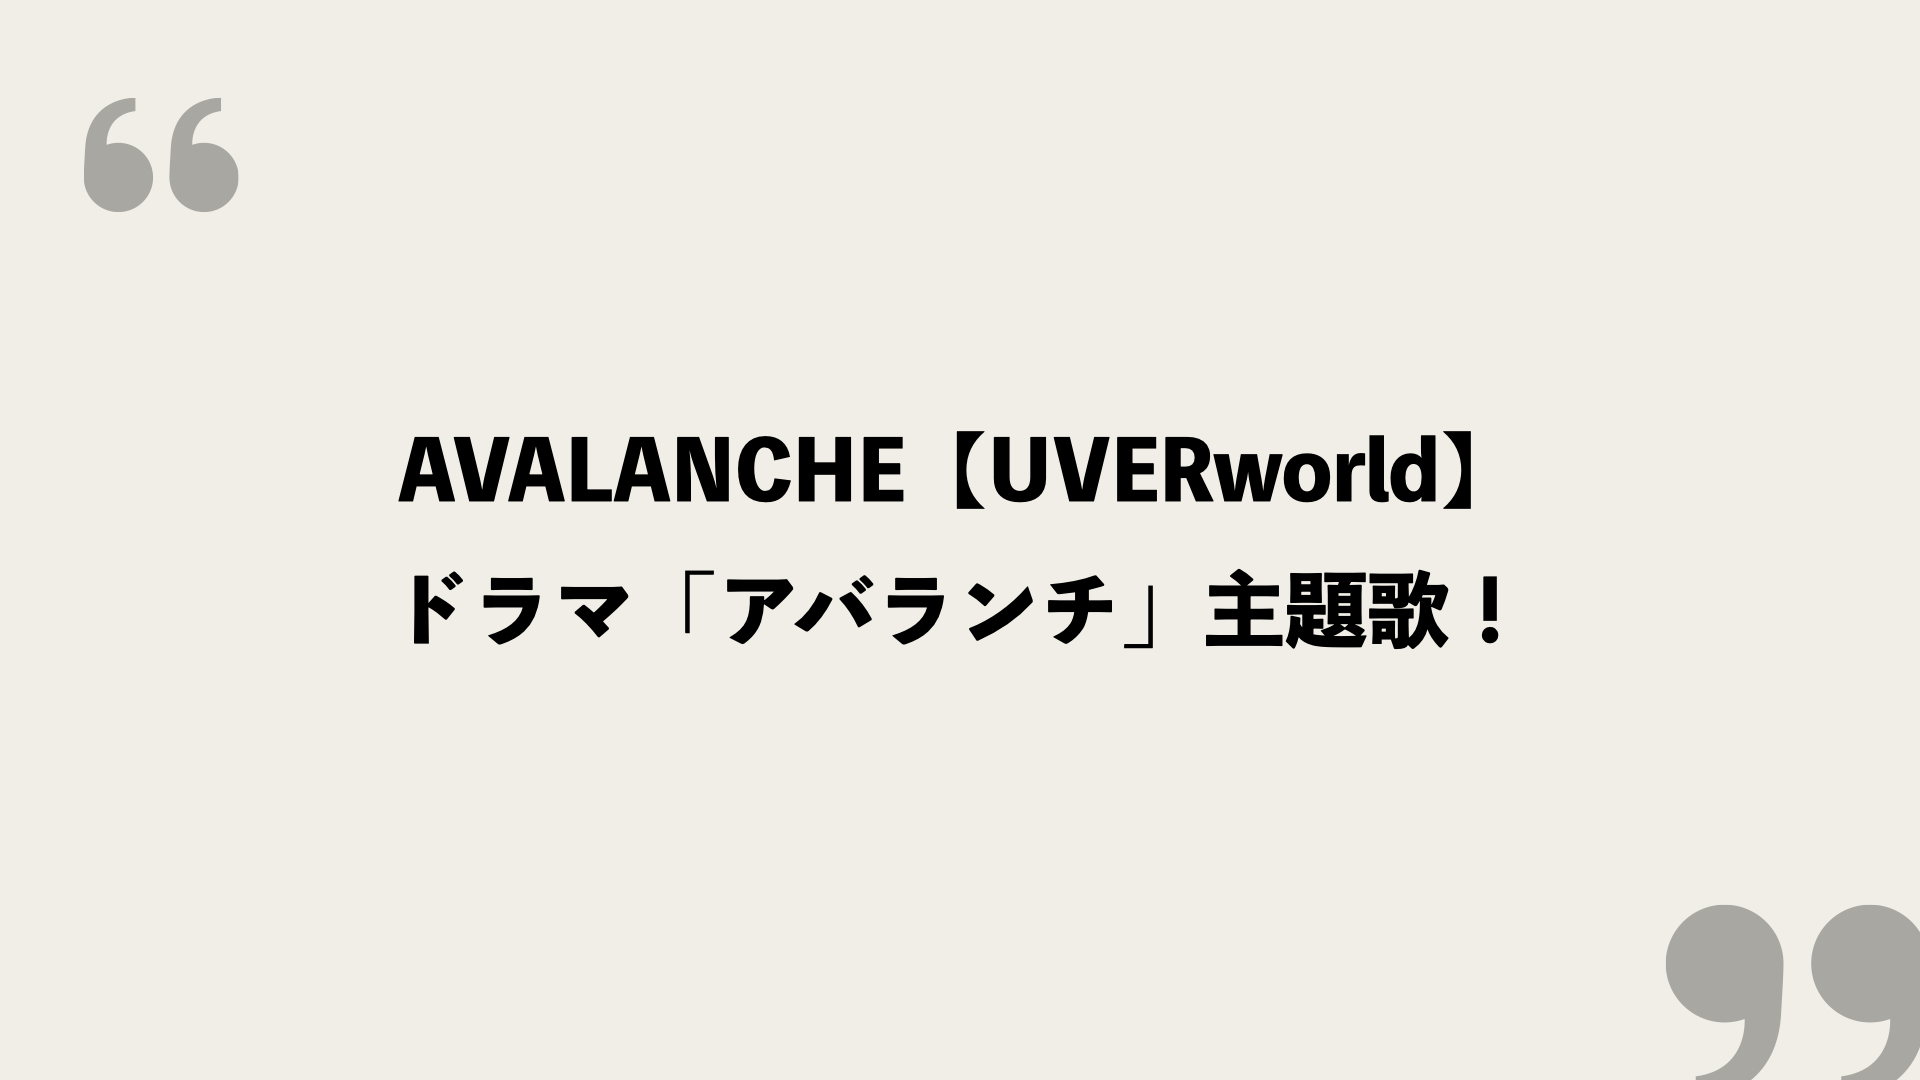 Avalanche Uverworld 歌詞の意味を考察 ドラマ アバランチ 主題歌 Framu Media